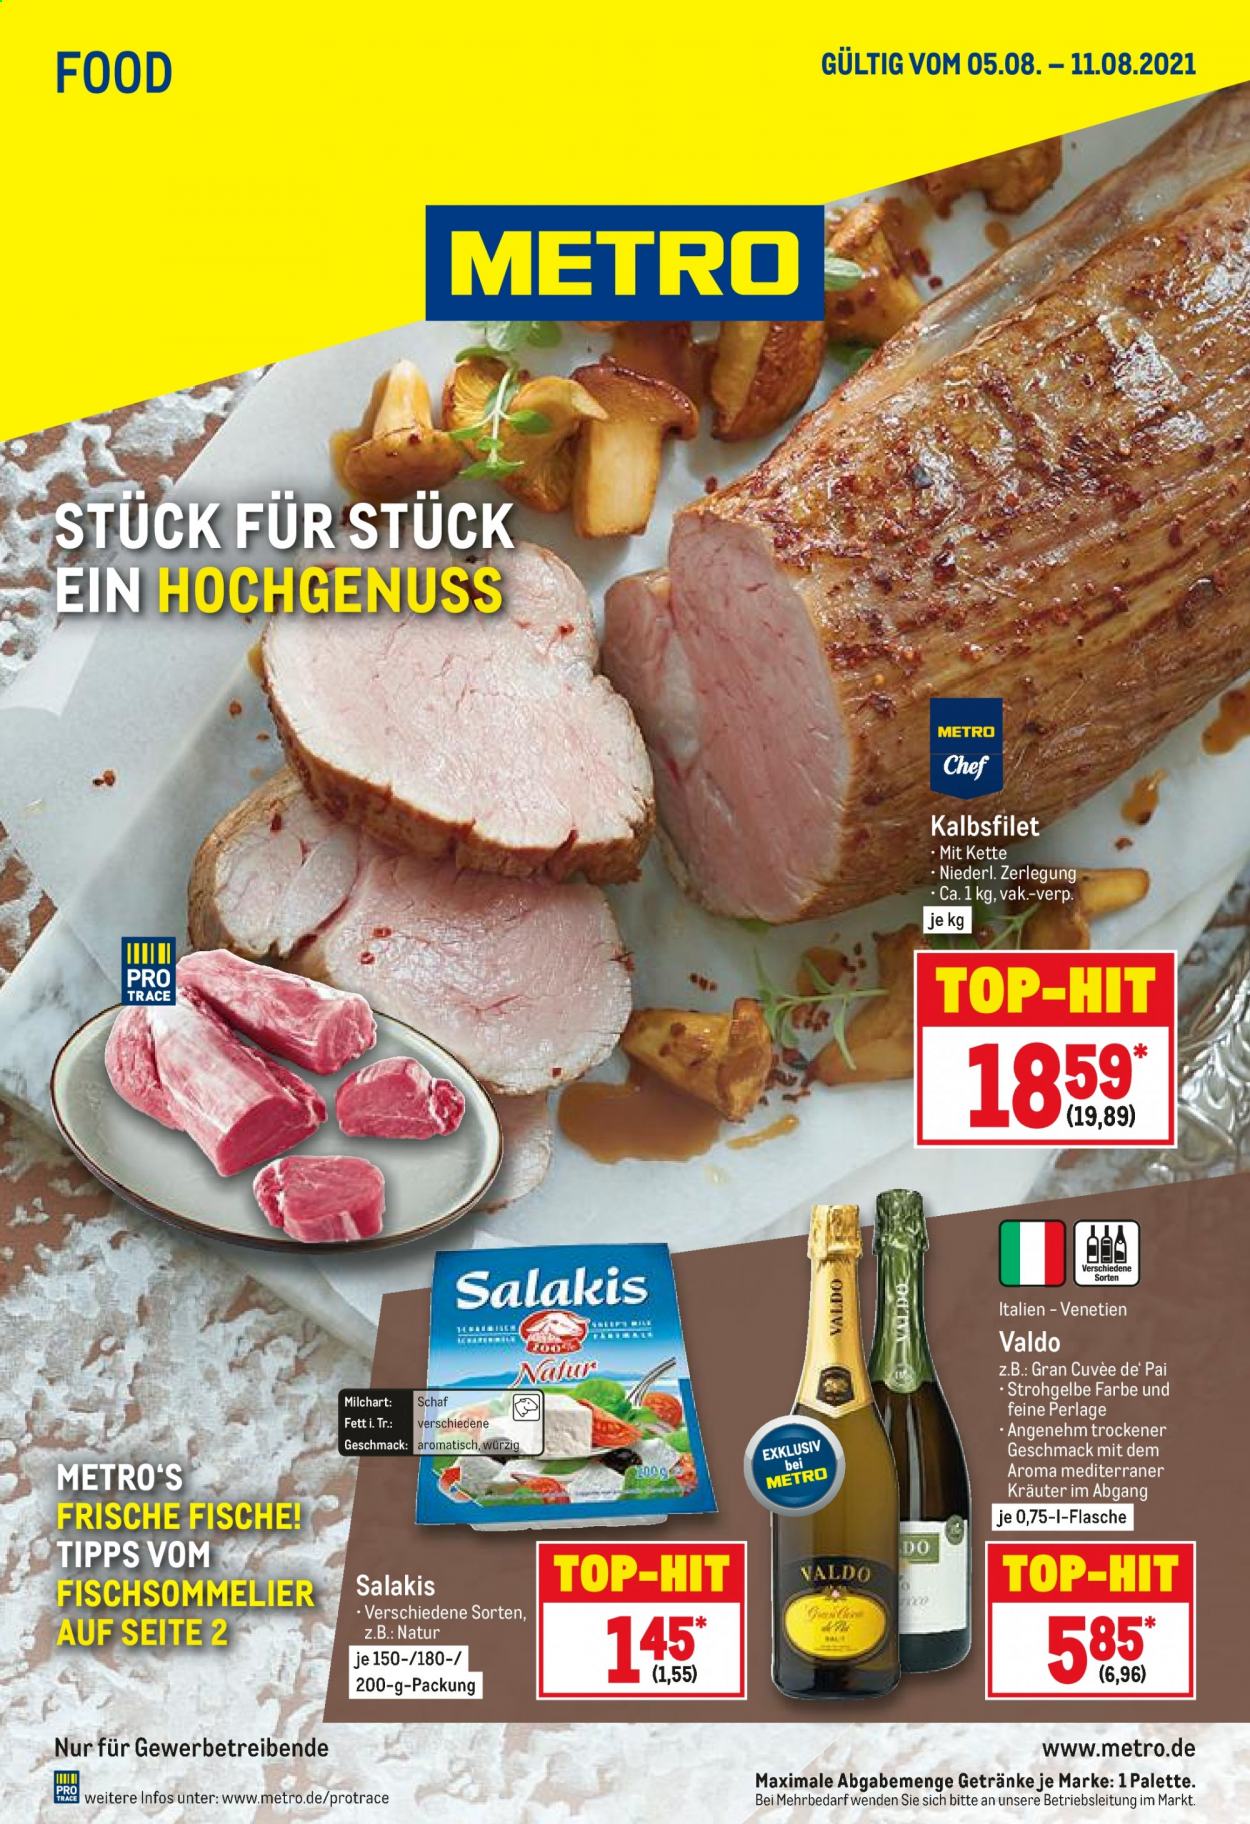 thumbnail - Prospekte Metro - 5.08.2021 - 11.08.2021 - Produkte in Aktion - Fische, Käse, Salakis, Wein, Valdo, Kette. Seite 1.